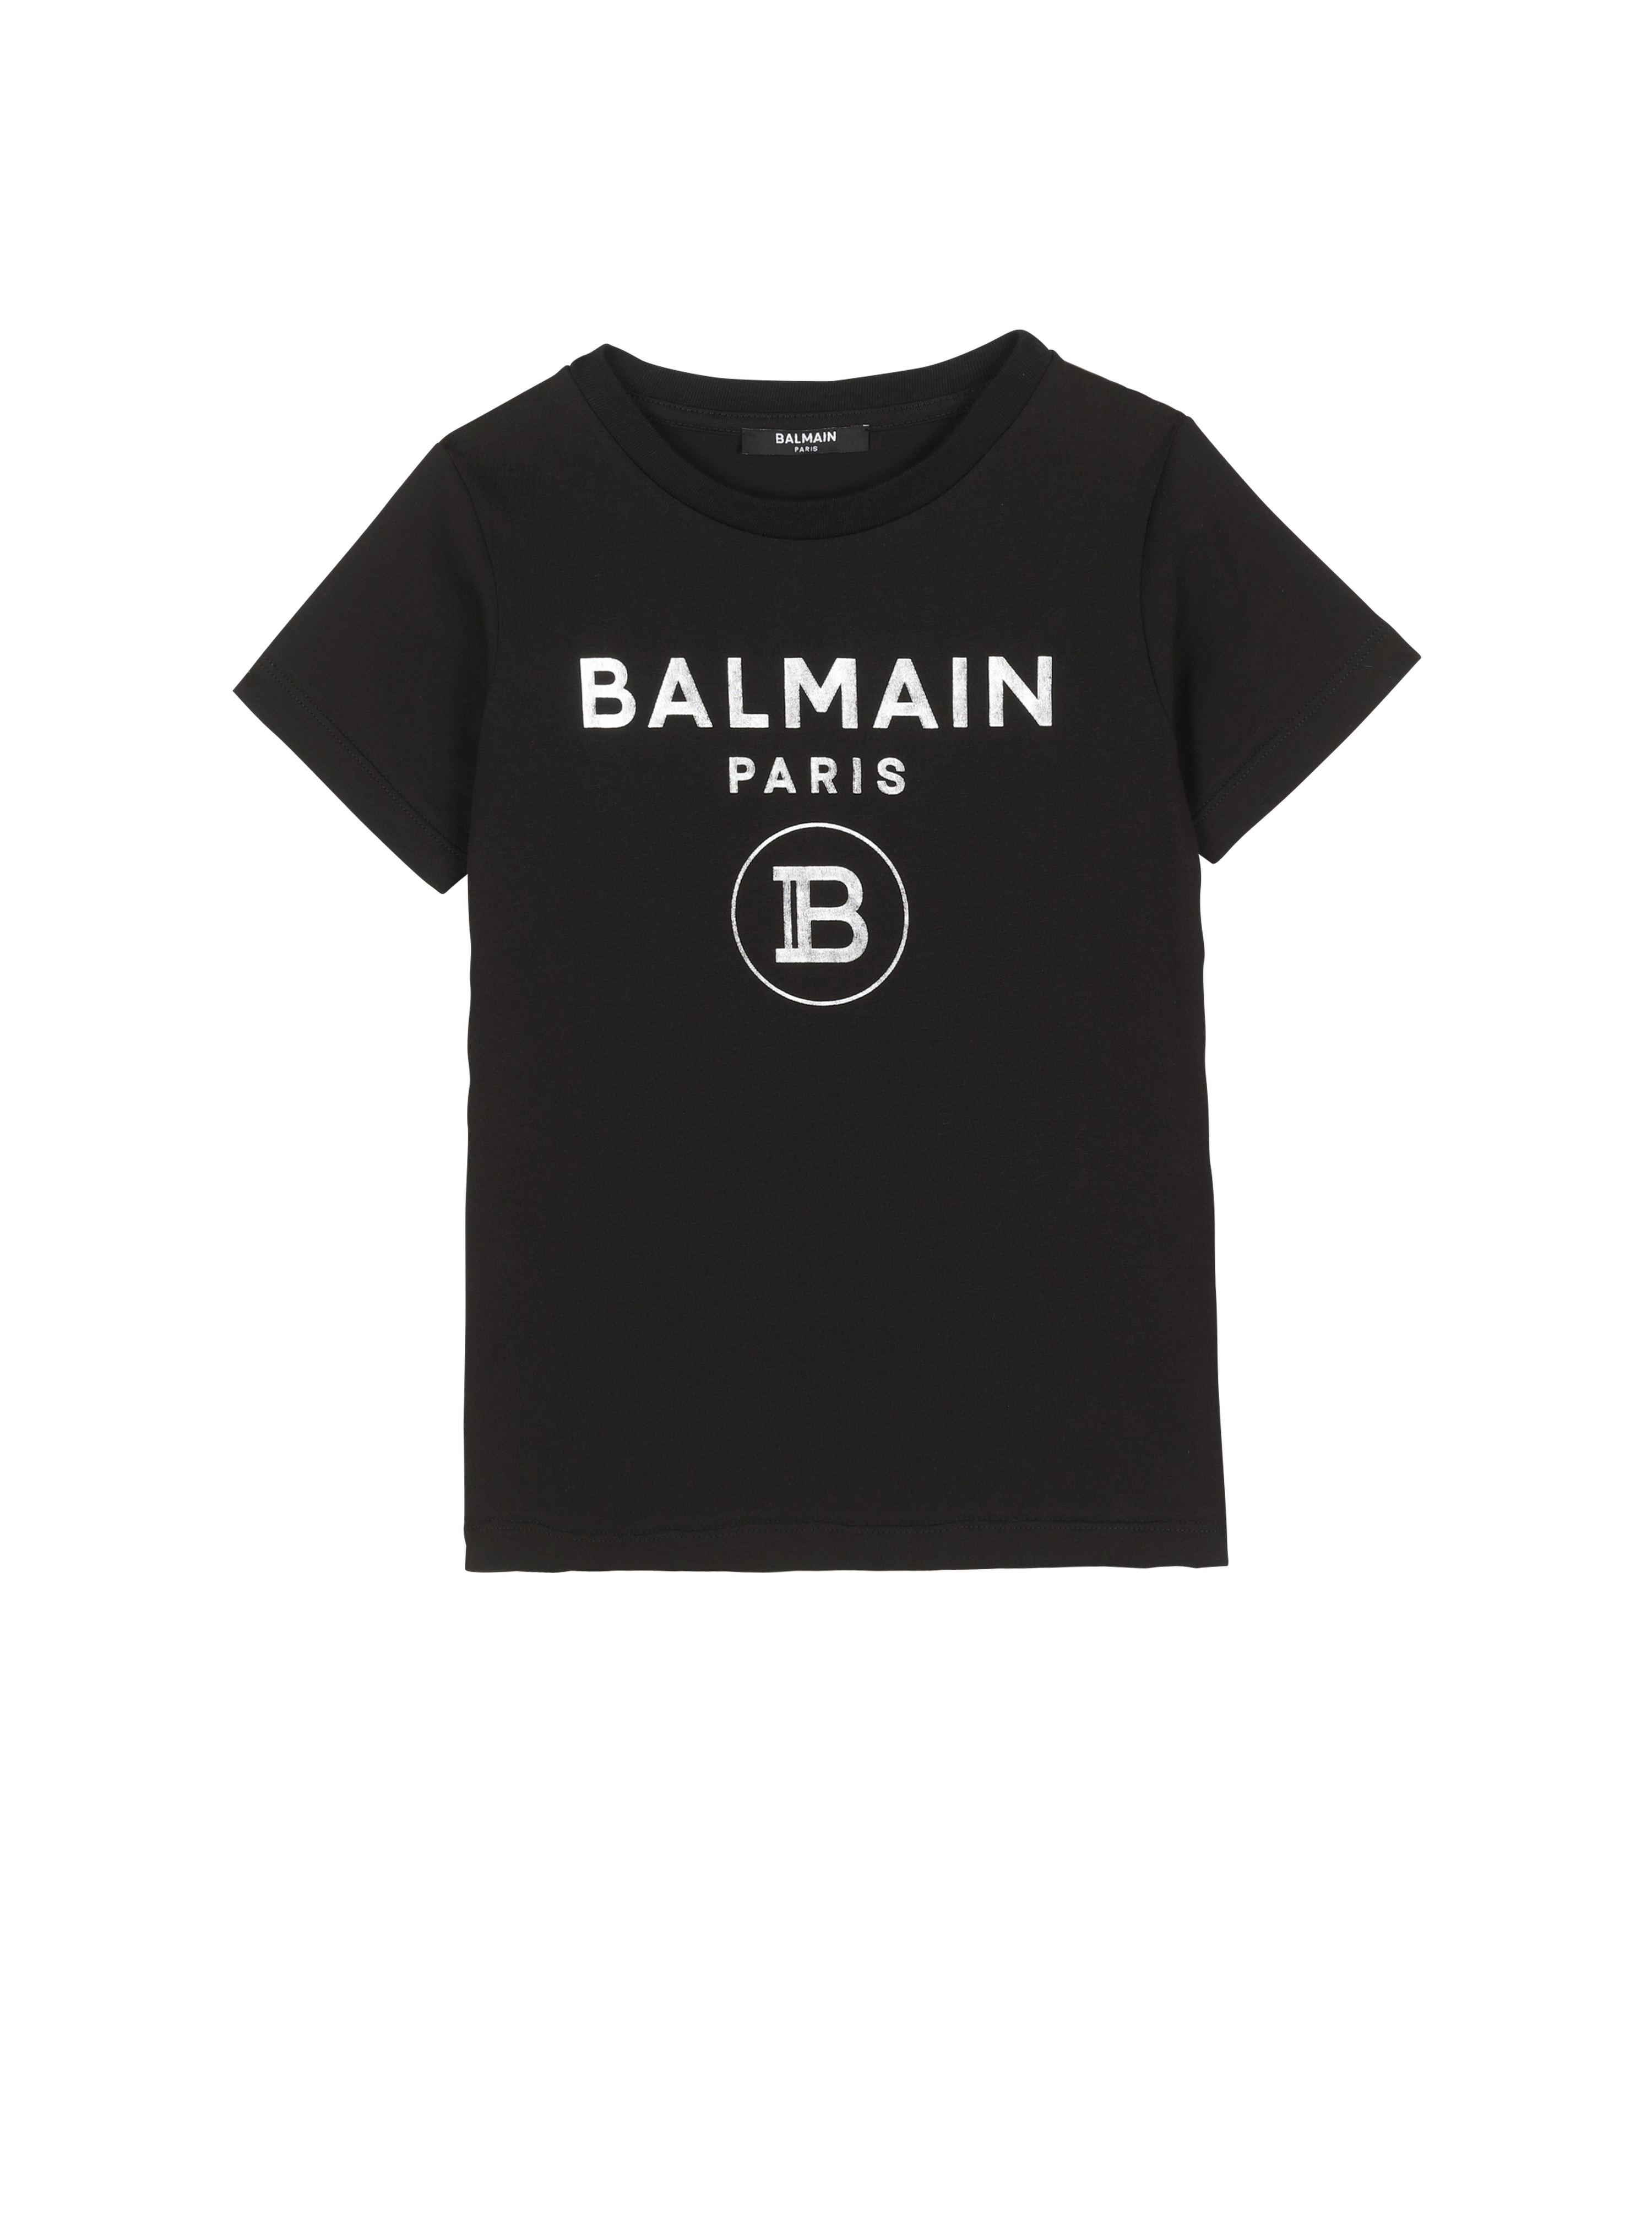 T-shirt en coton à logo Balmain, noir